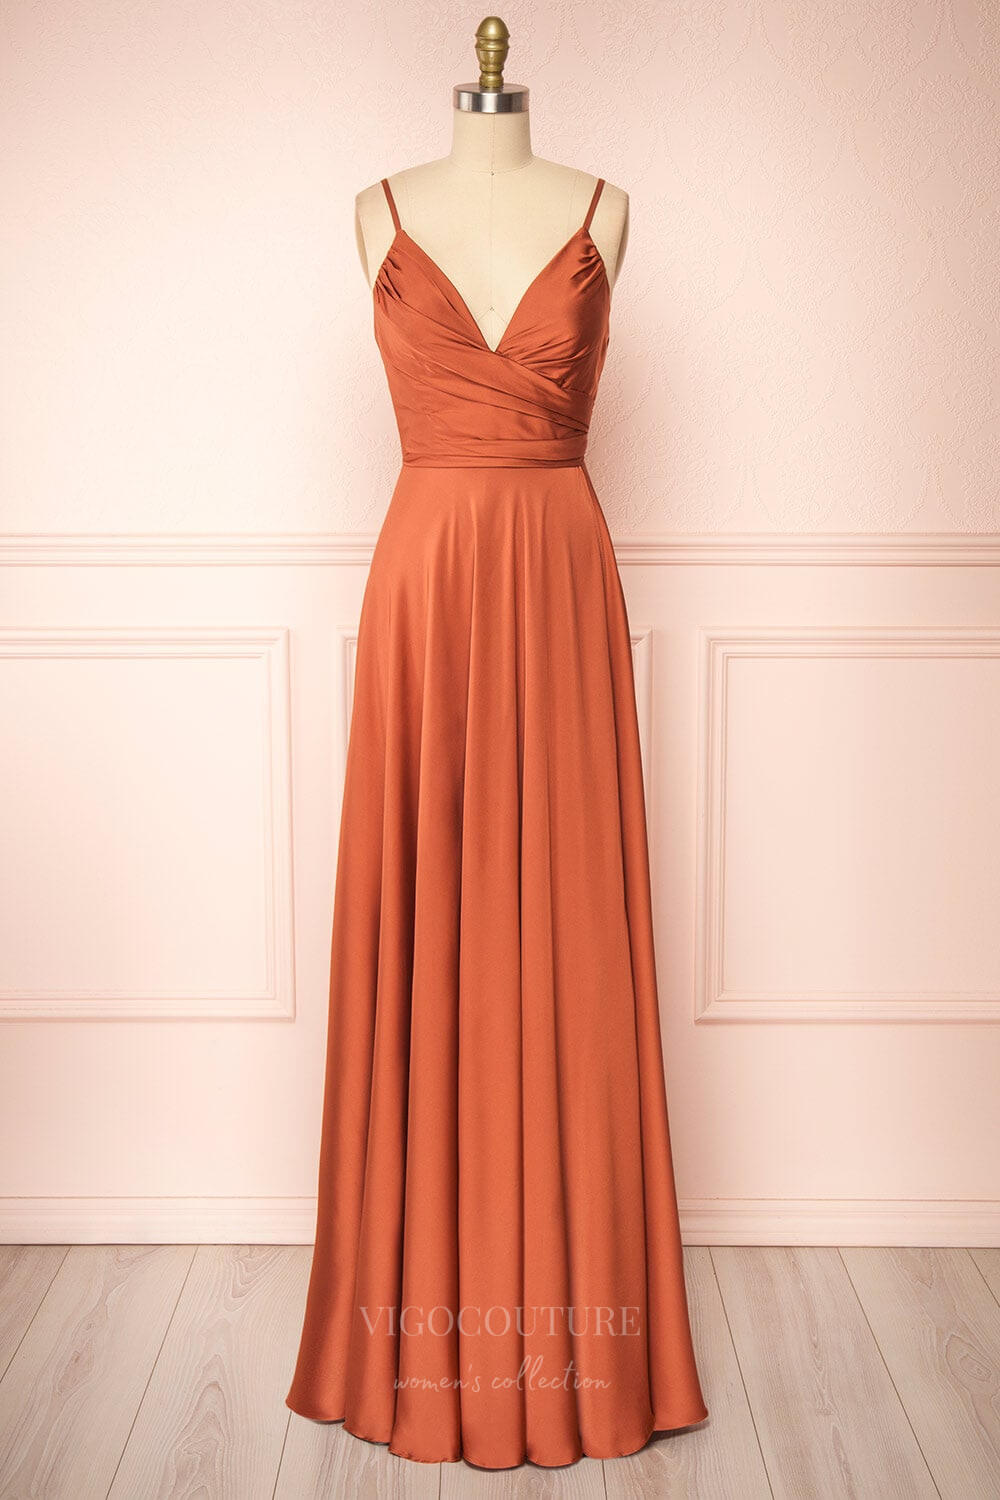 vigocouture-Stretchable Woven Spaghetti Strap Pleated Prom Dress 20858-Prom Dresses-vigocouture-Burnt Orange-US2-